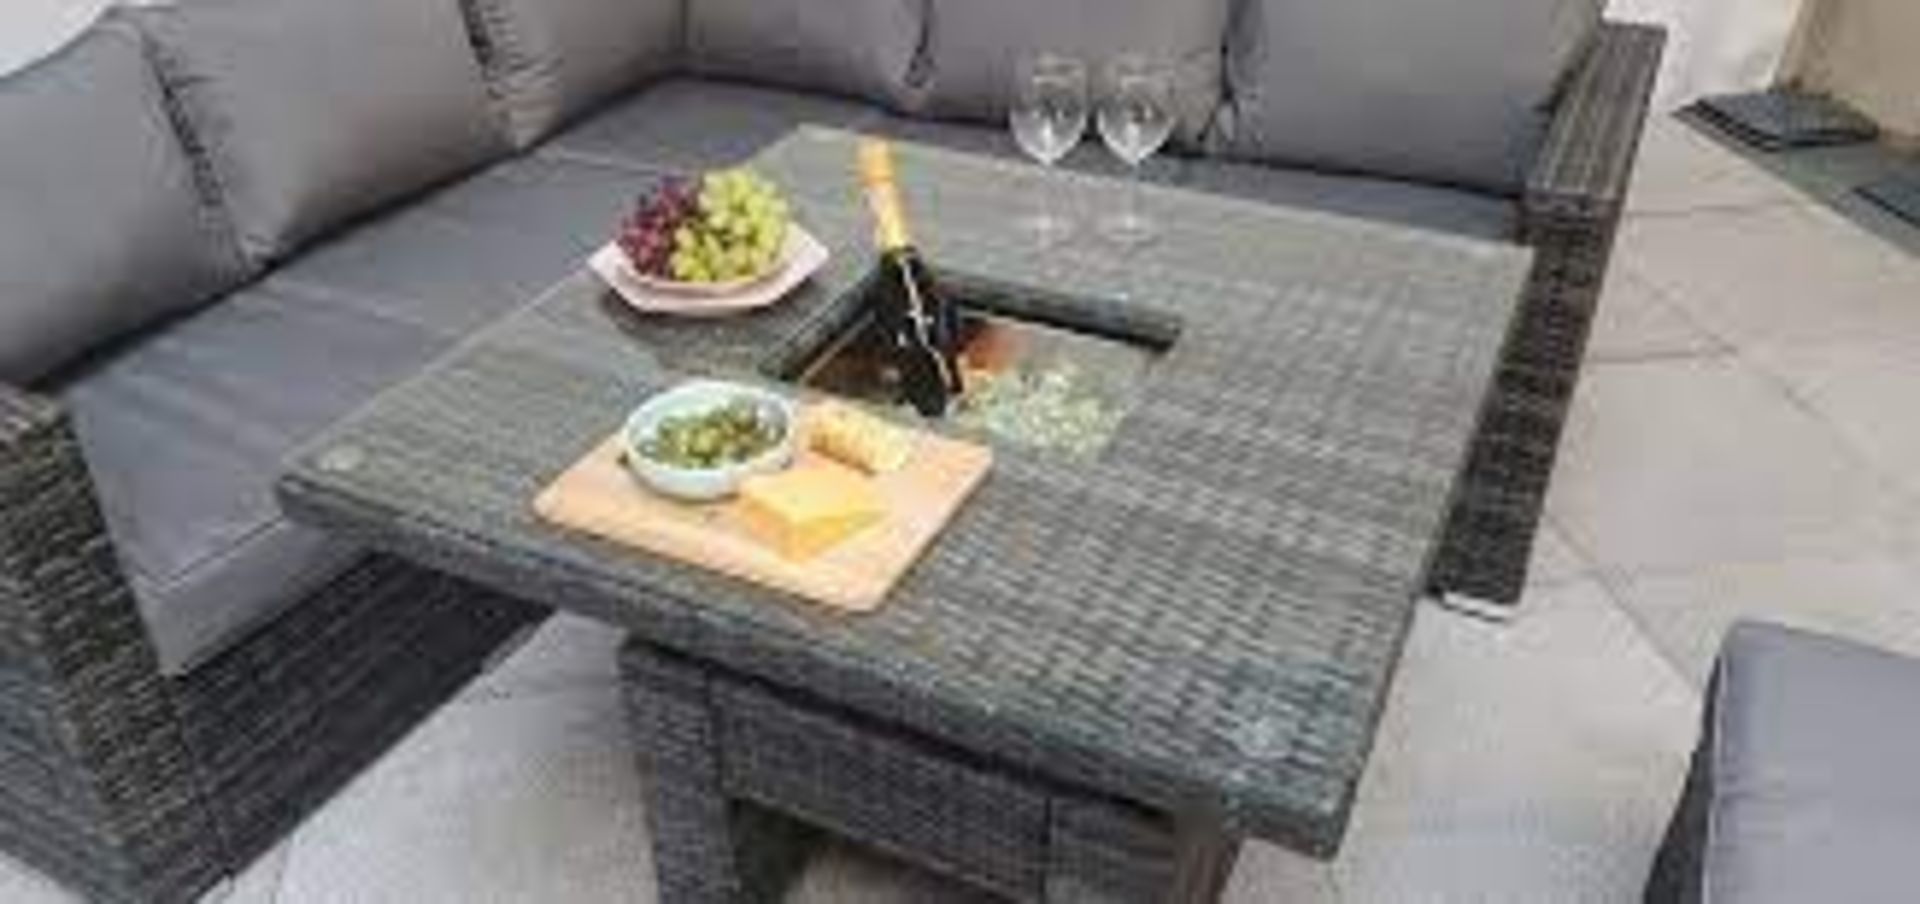 New Boxed Luxury Signature Weave Georgia Corner Dining Set With Table. RRP £1,999. Stylish - Image 2 of 2